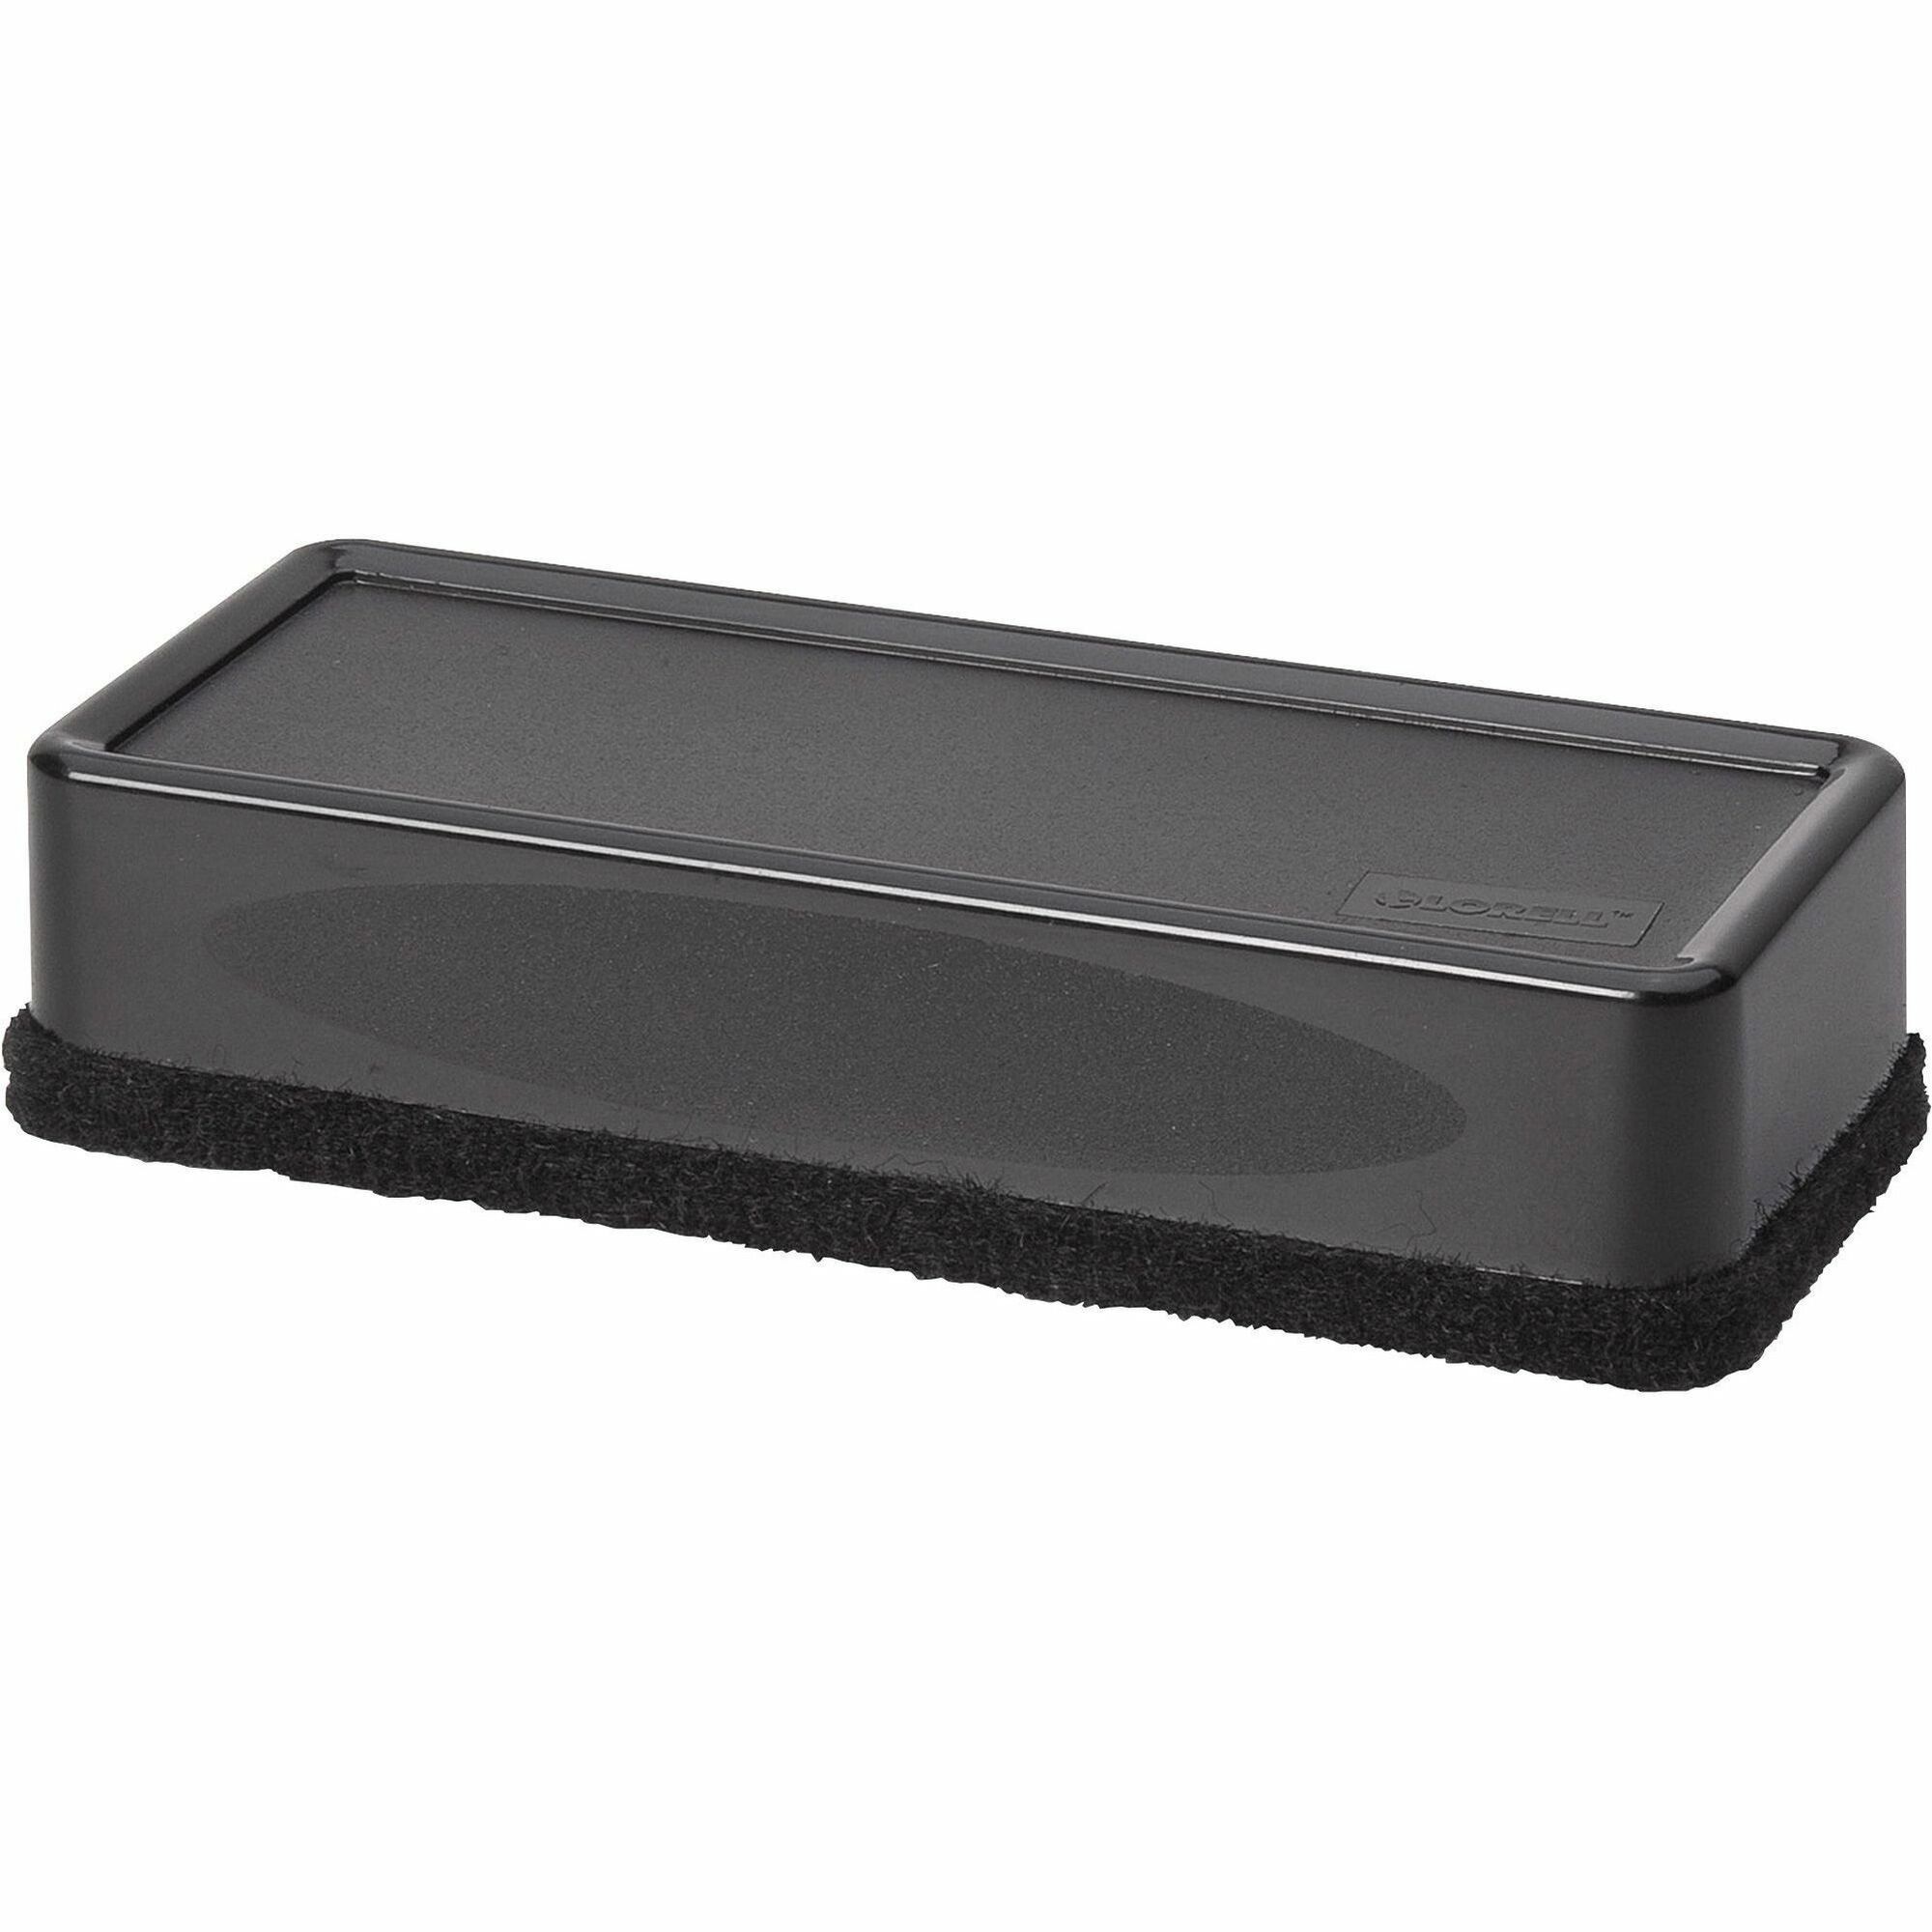 Lorell Cloth Dry-erase Board Eraser - 2.19